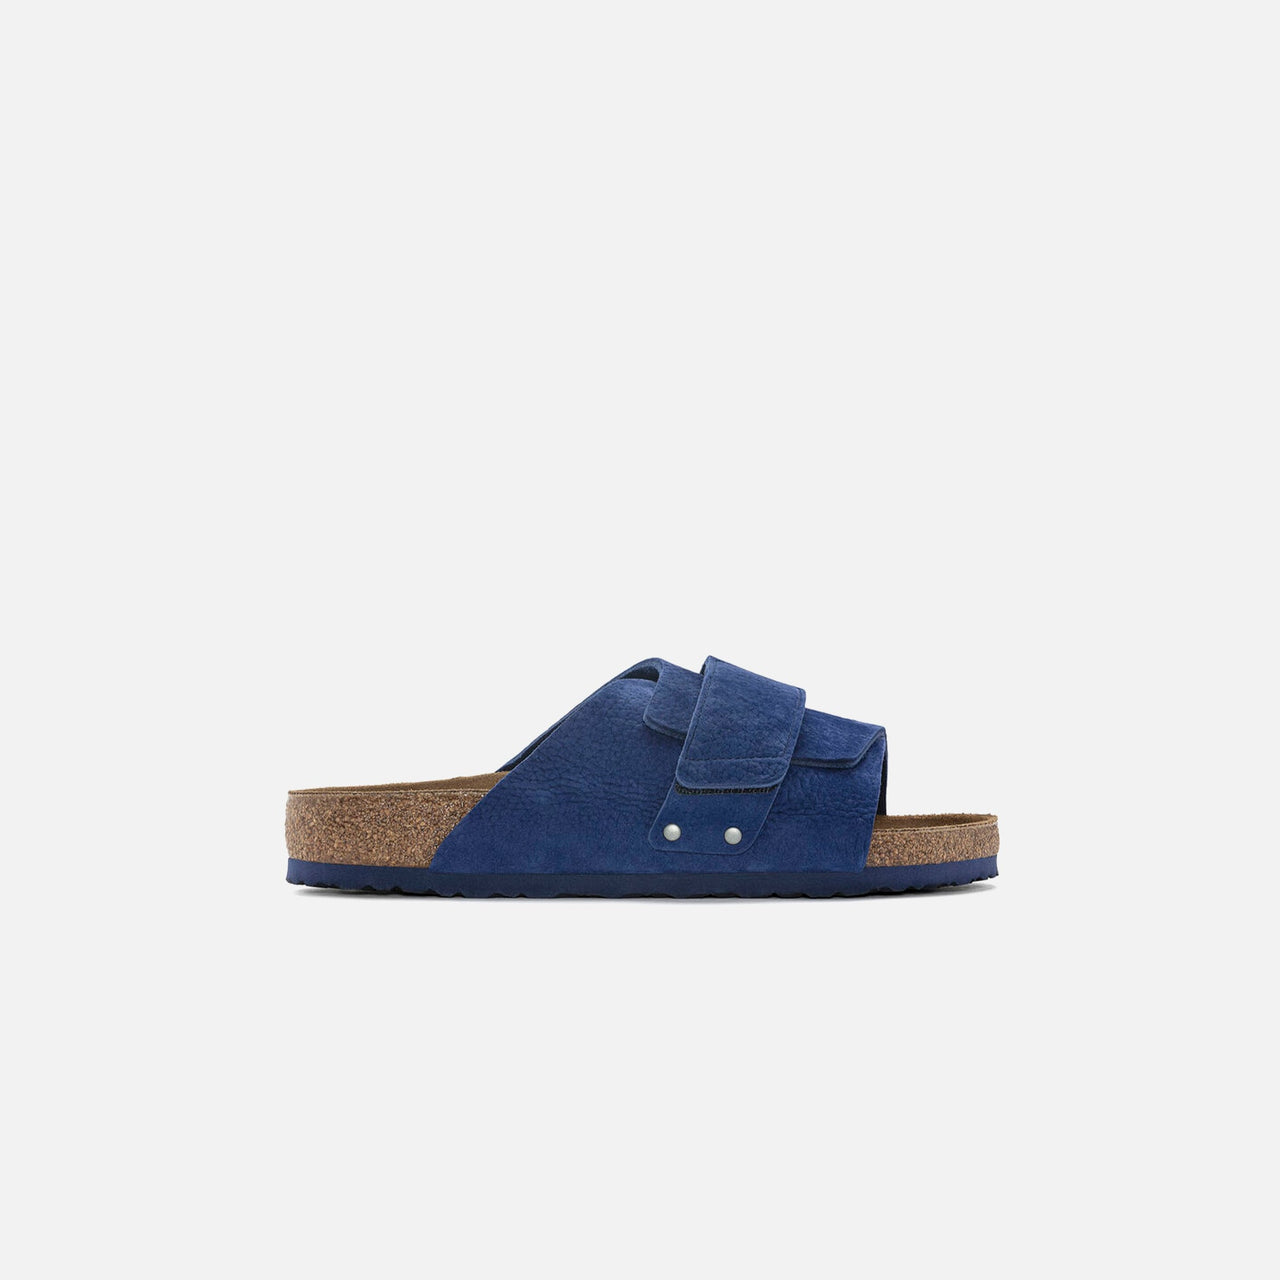 Birkenstock Kyoto Suede Ultra Blue women's sandal with adjustable strap and cork footbed